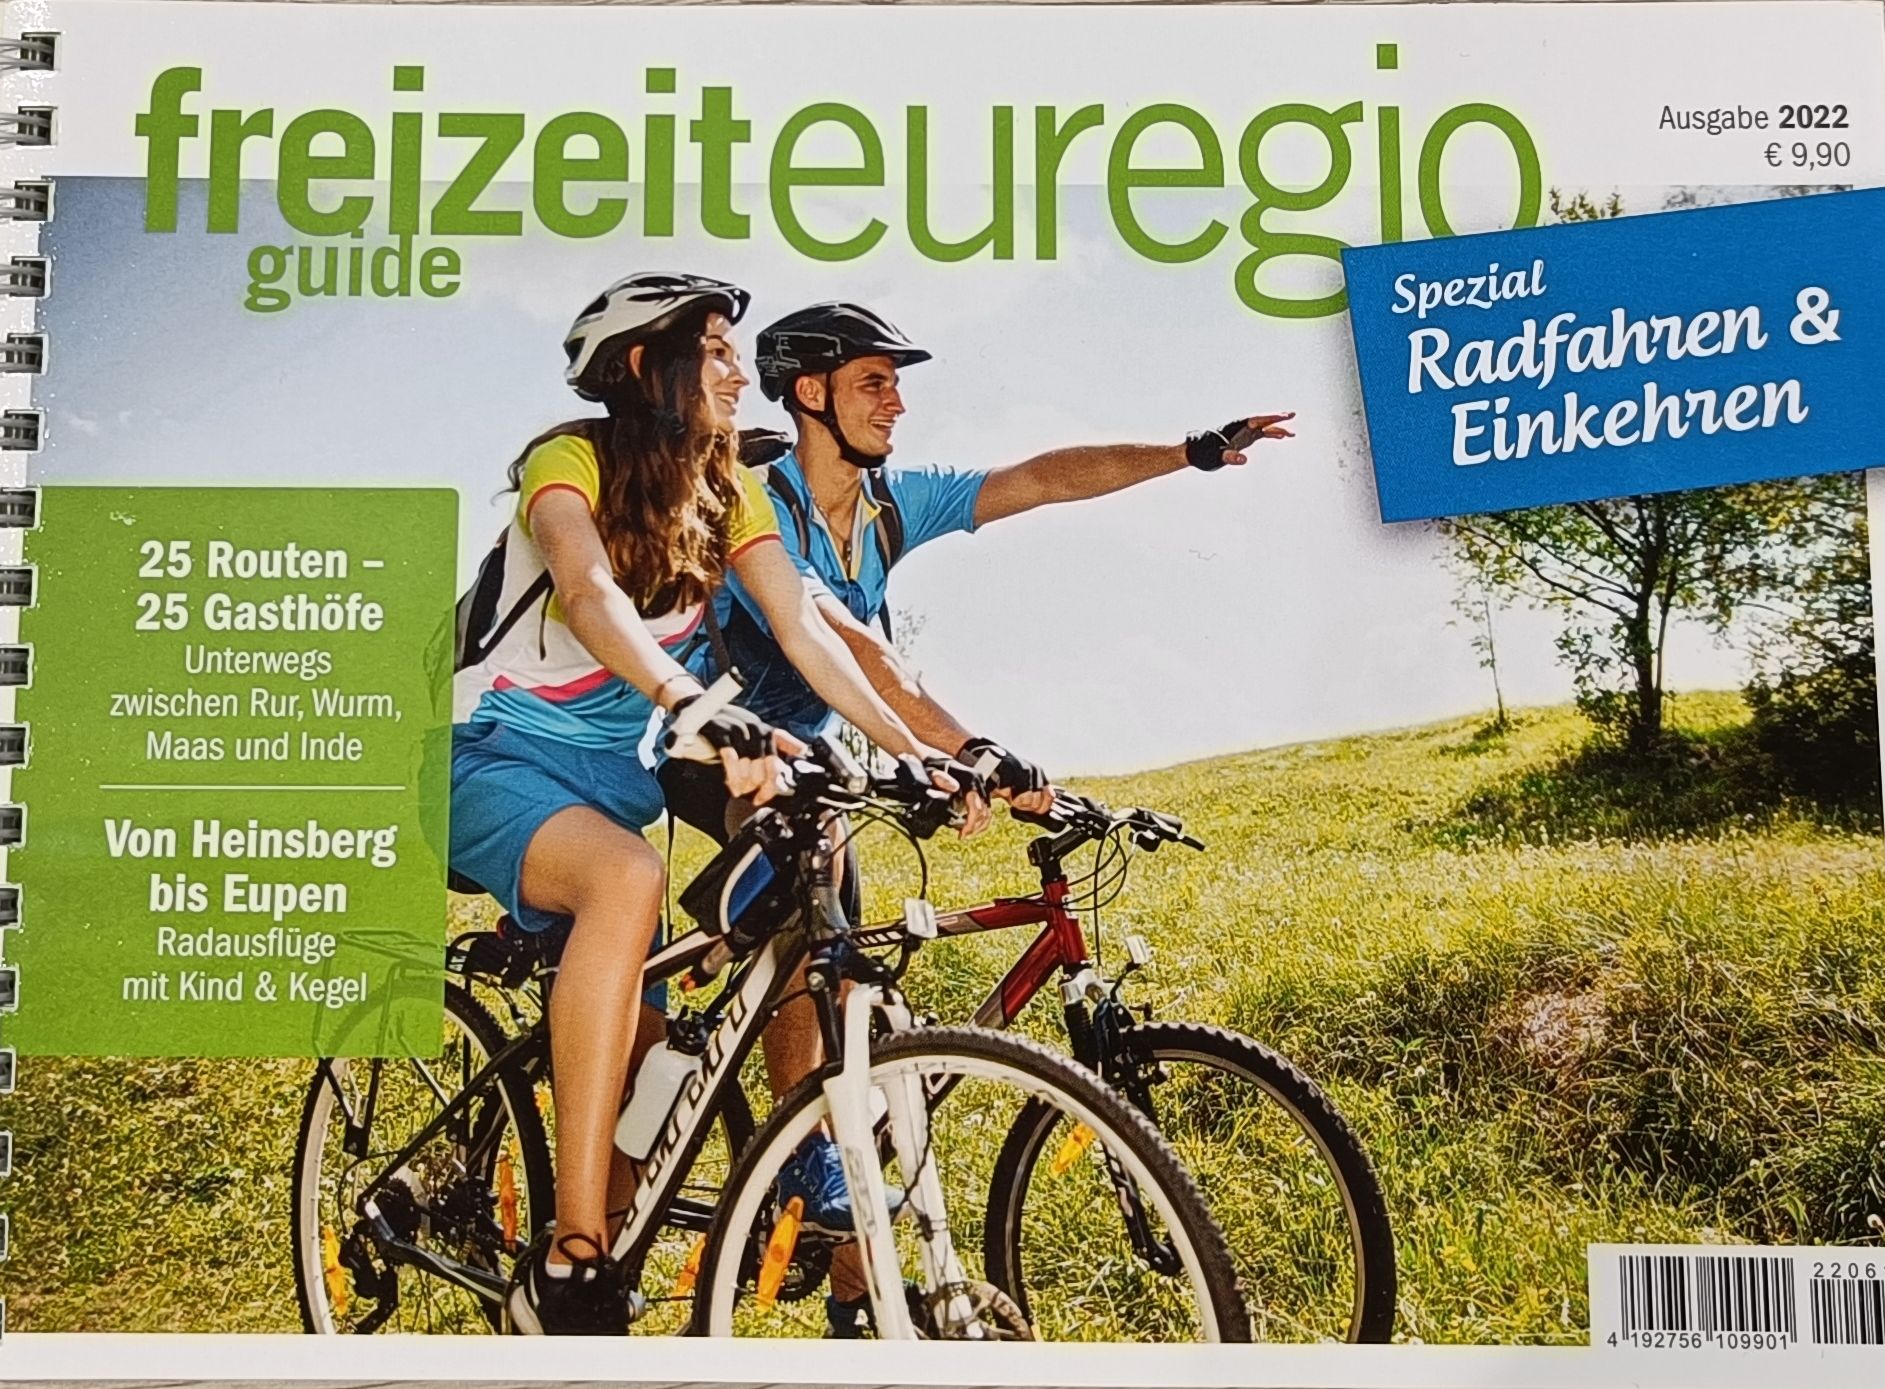 freizeitguide euregio spezial: Radfahren & Einkehren 2022/2023